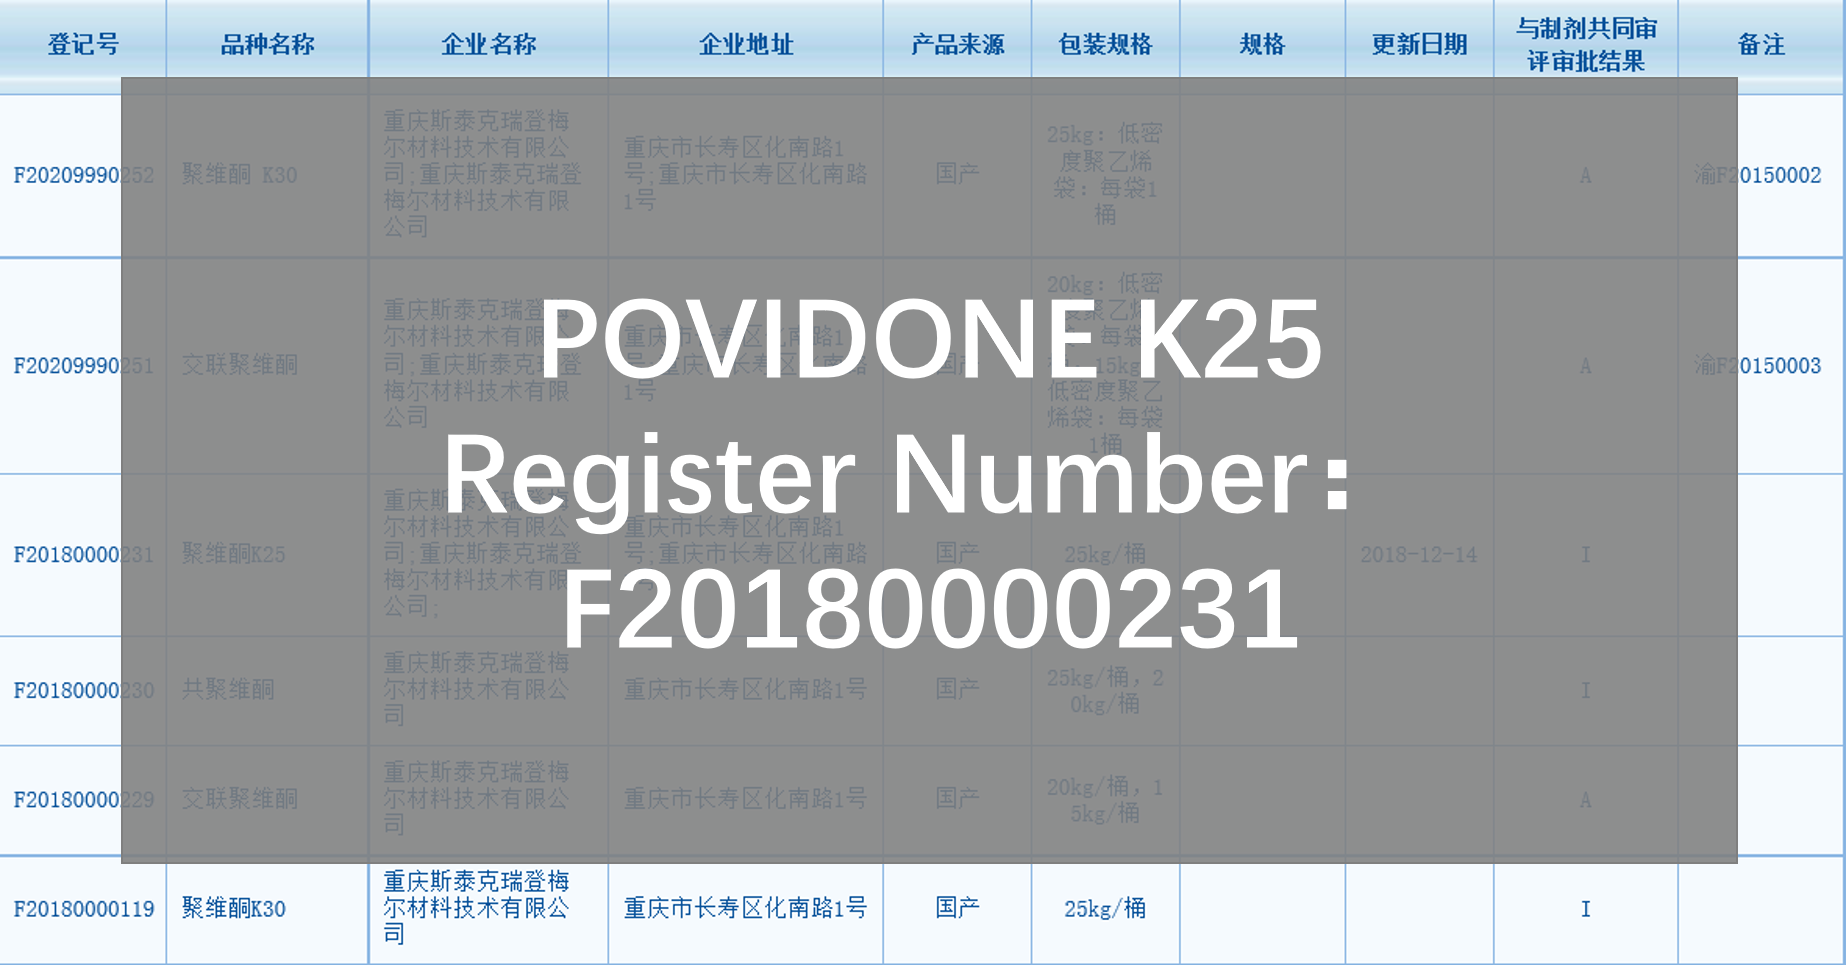 NMPA CDE registration - POVIDONE K25